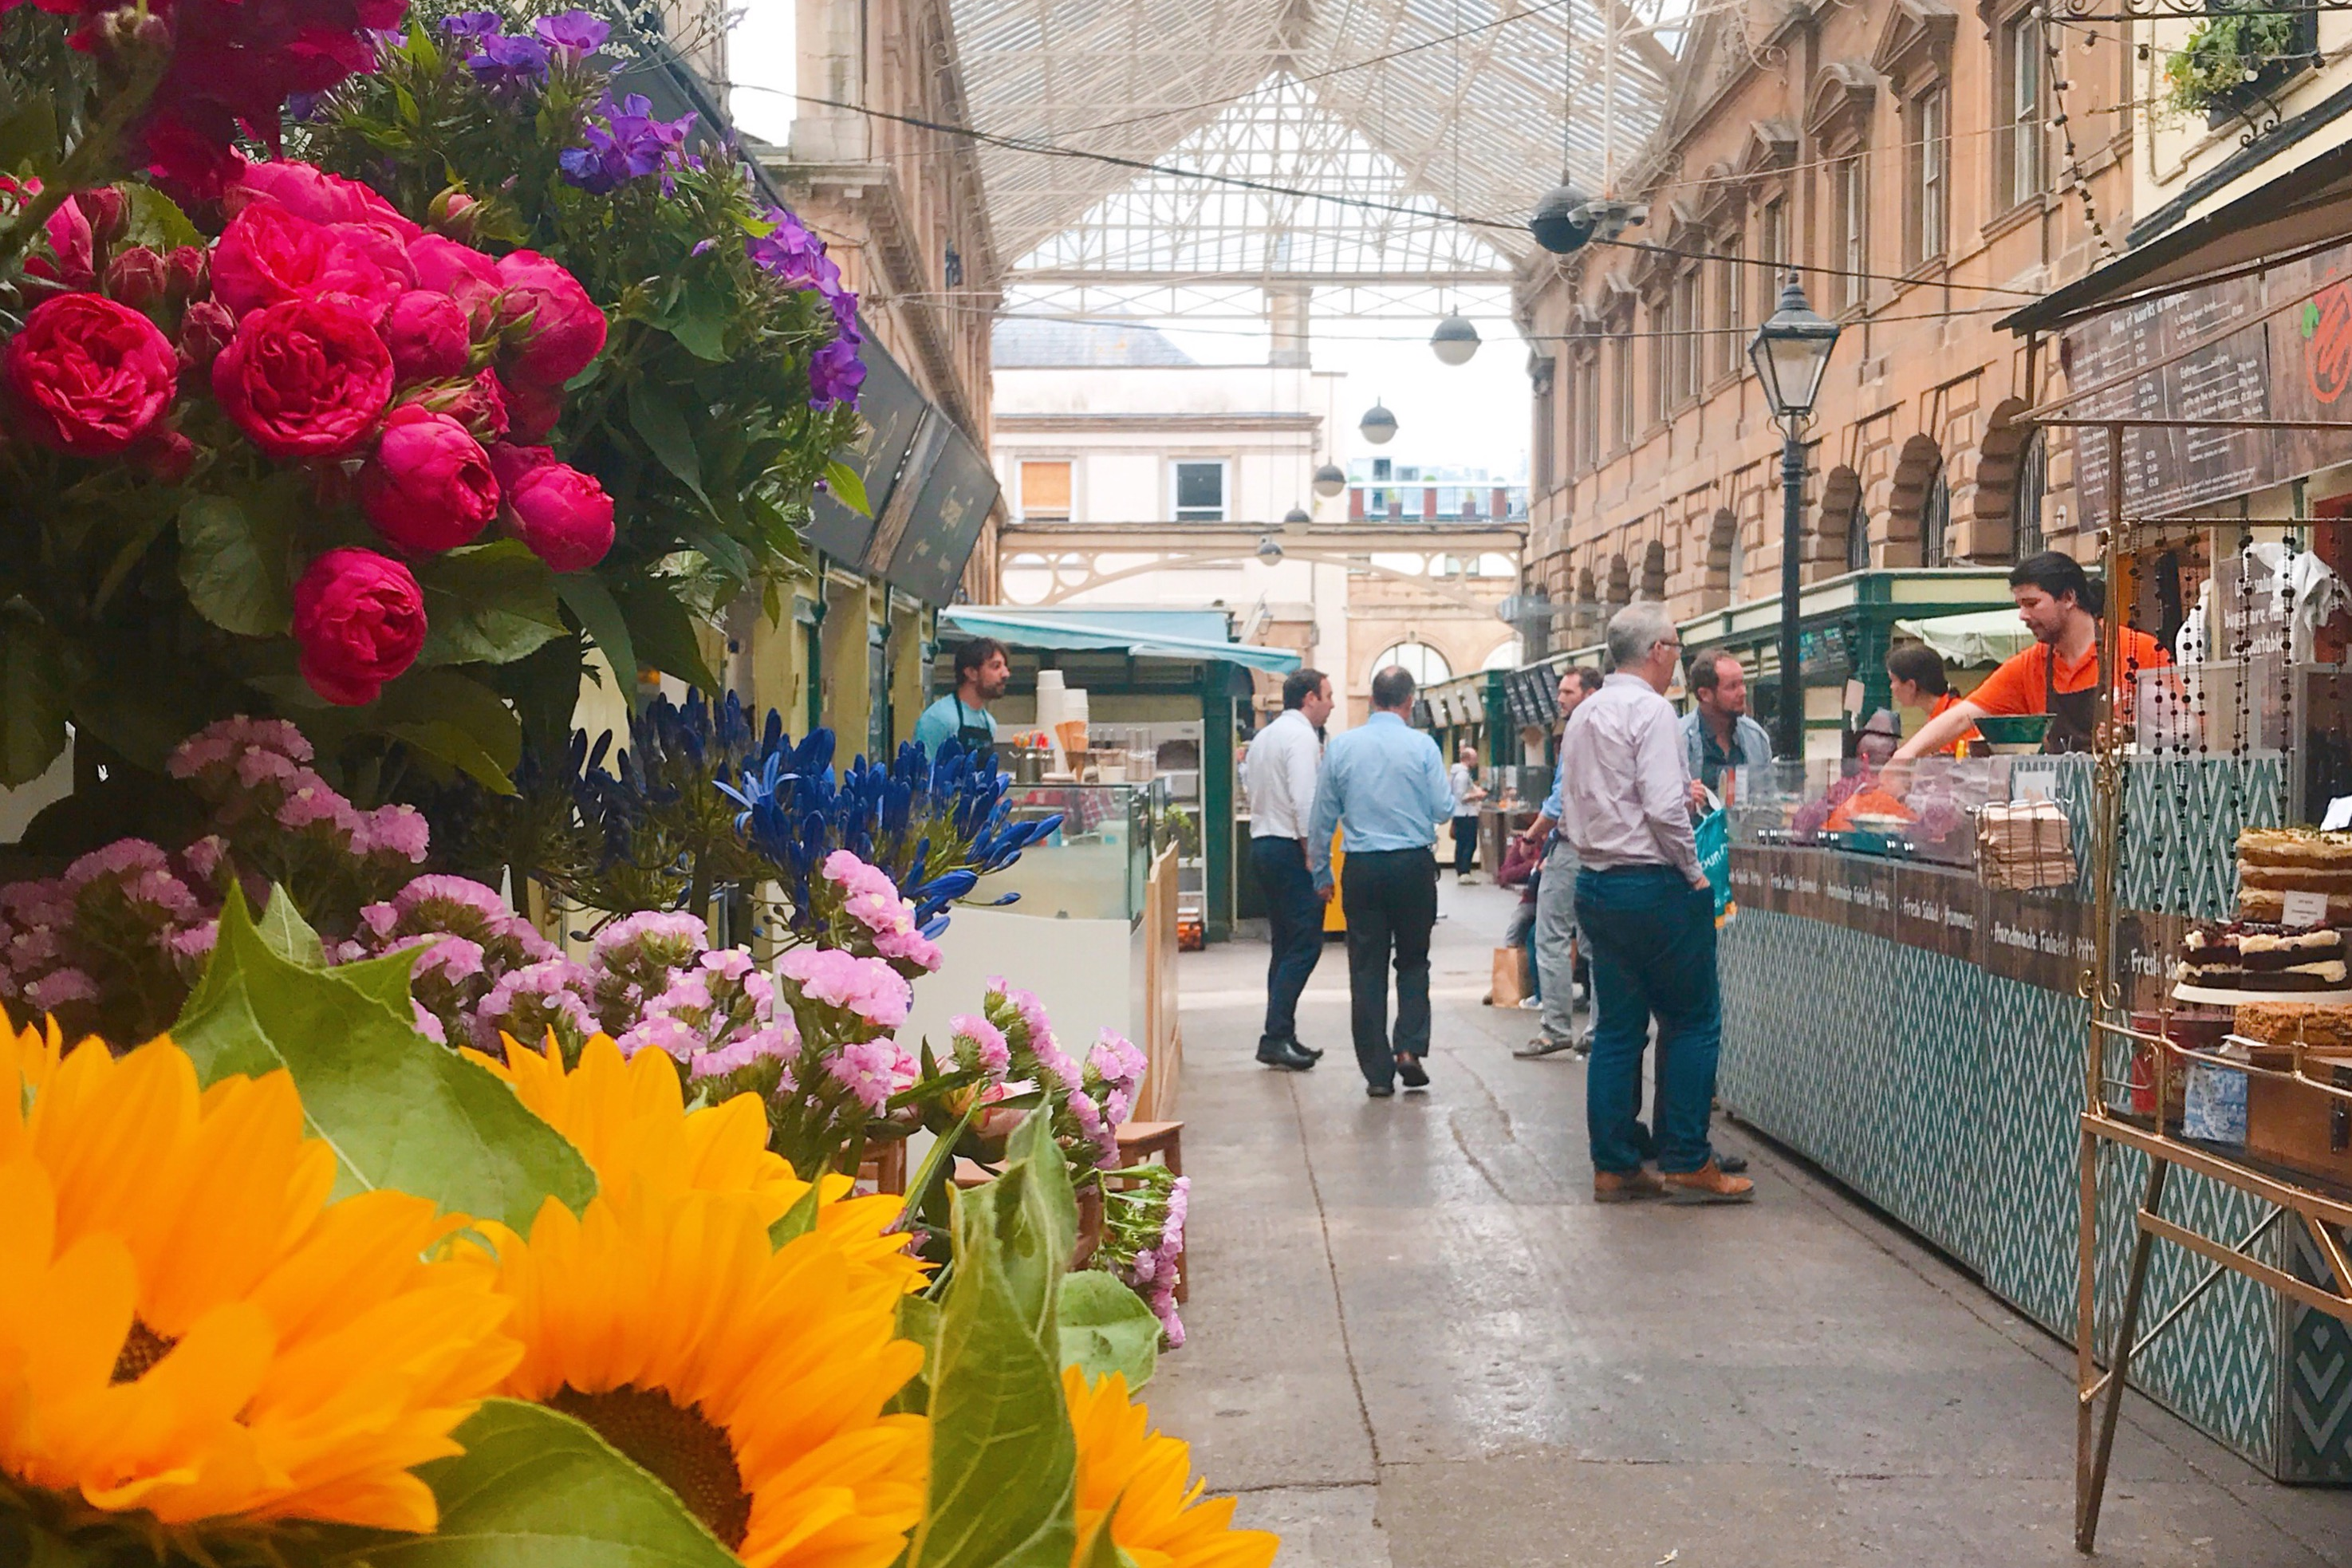 Flowers and market stalls at St Nicholas Market Bristol